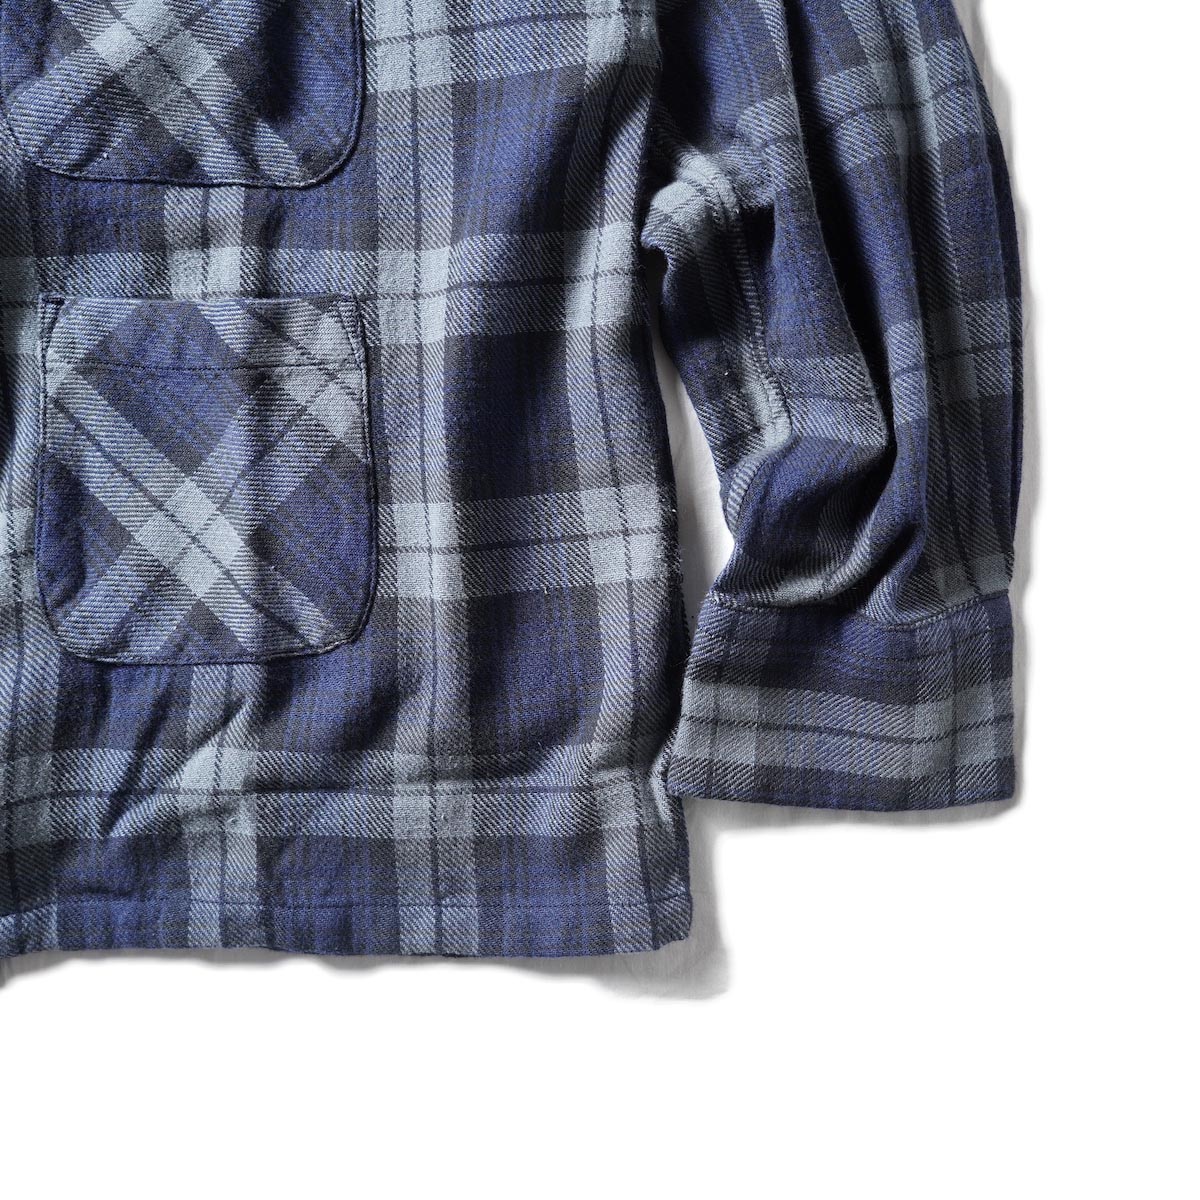 South2 West8 / 6POCKET SHIRT - PLAID TWILL (BLU/BLK/WHT)袖、裾